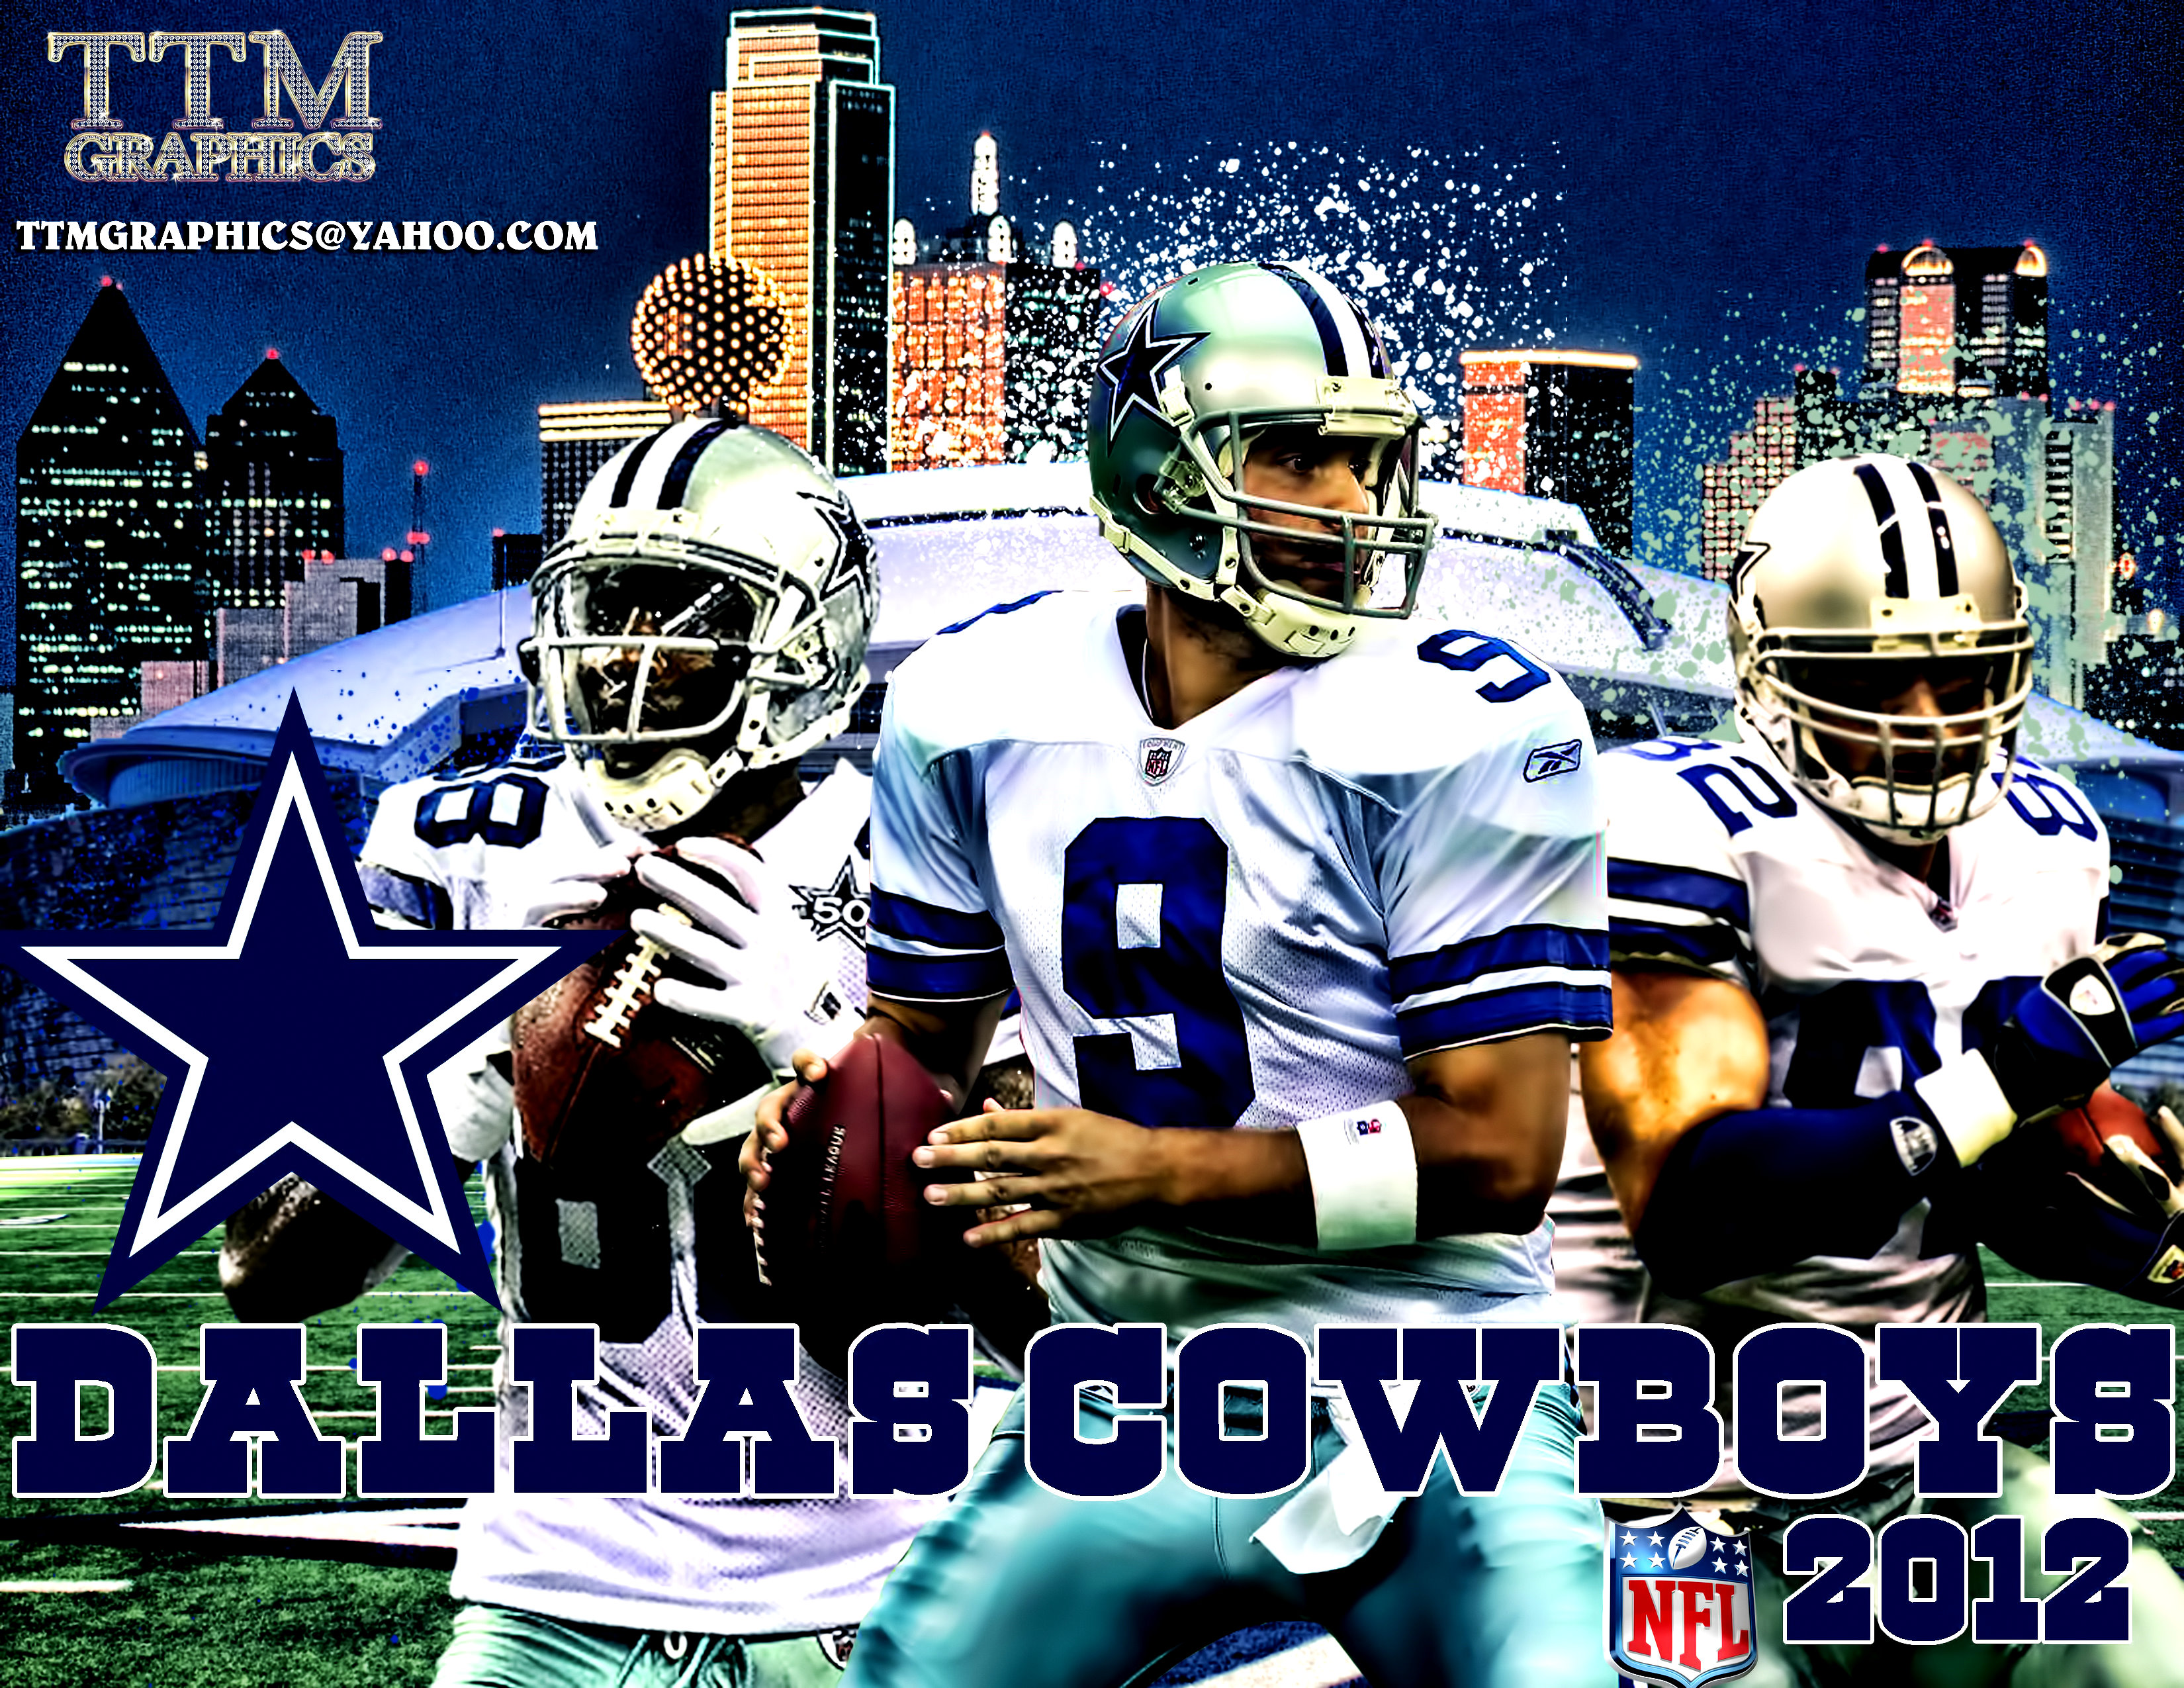 Awesome Dallas Cowboys wallpaper wallpaper